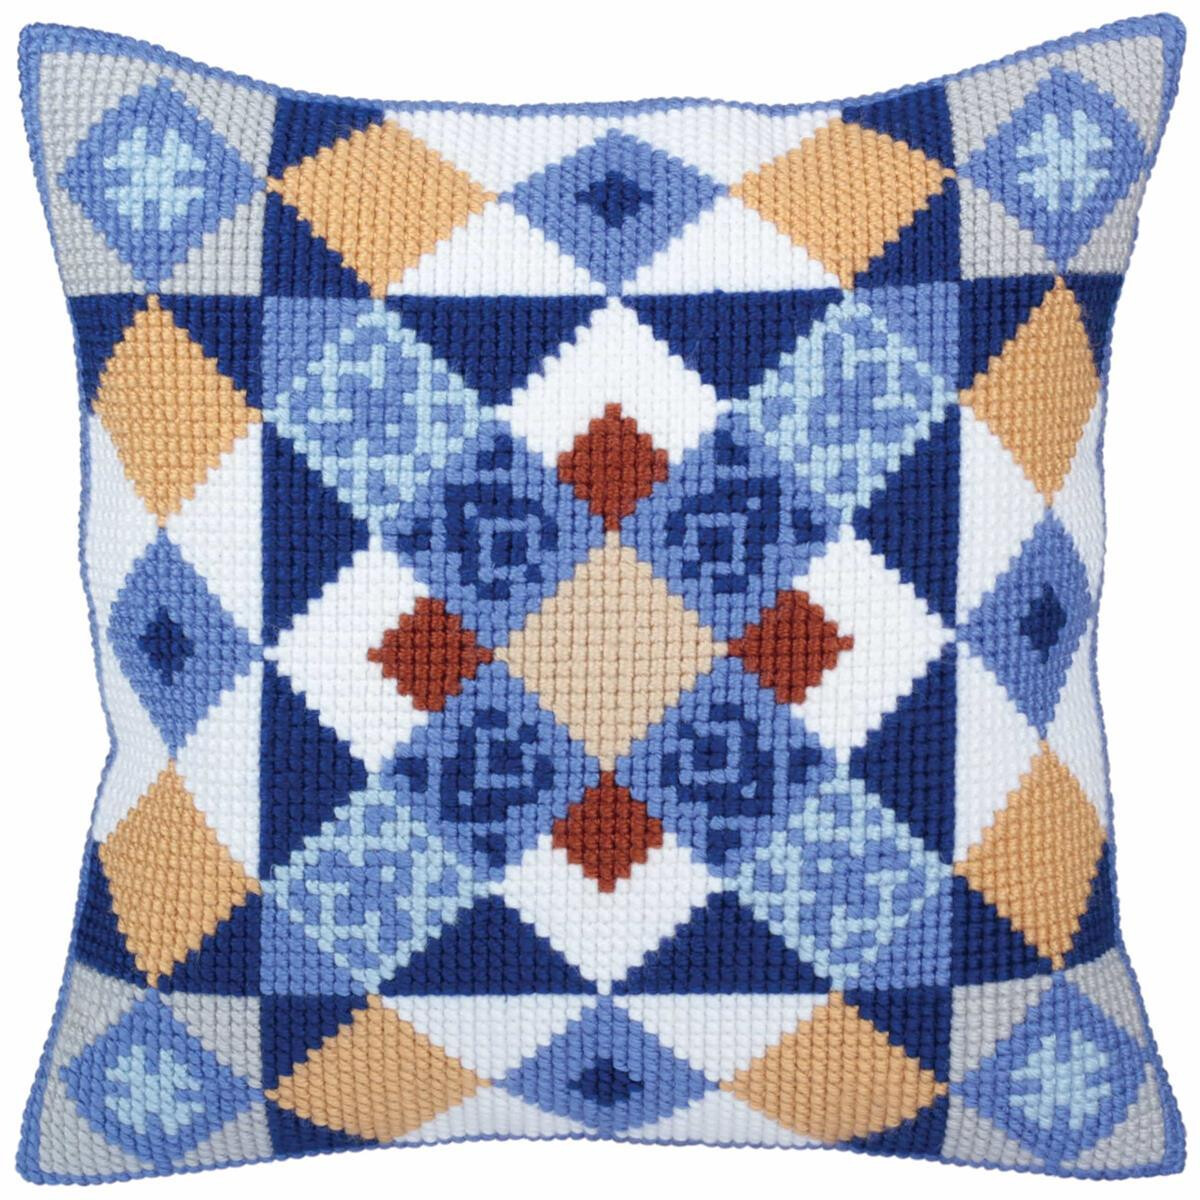 CdA stamped cross stitch kit cushion "Majolica"...